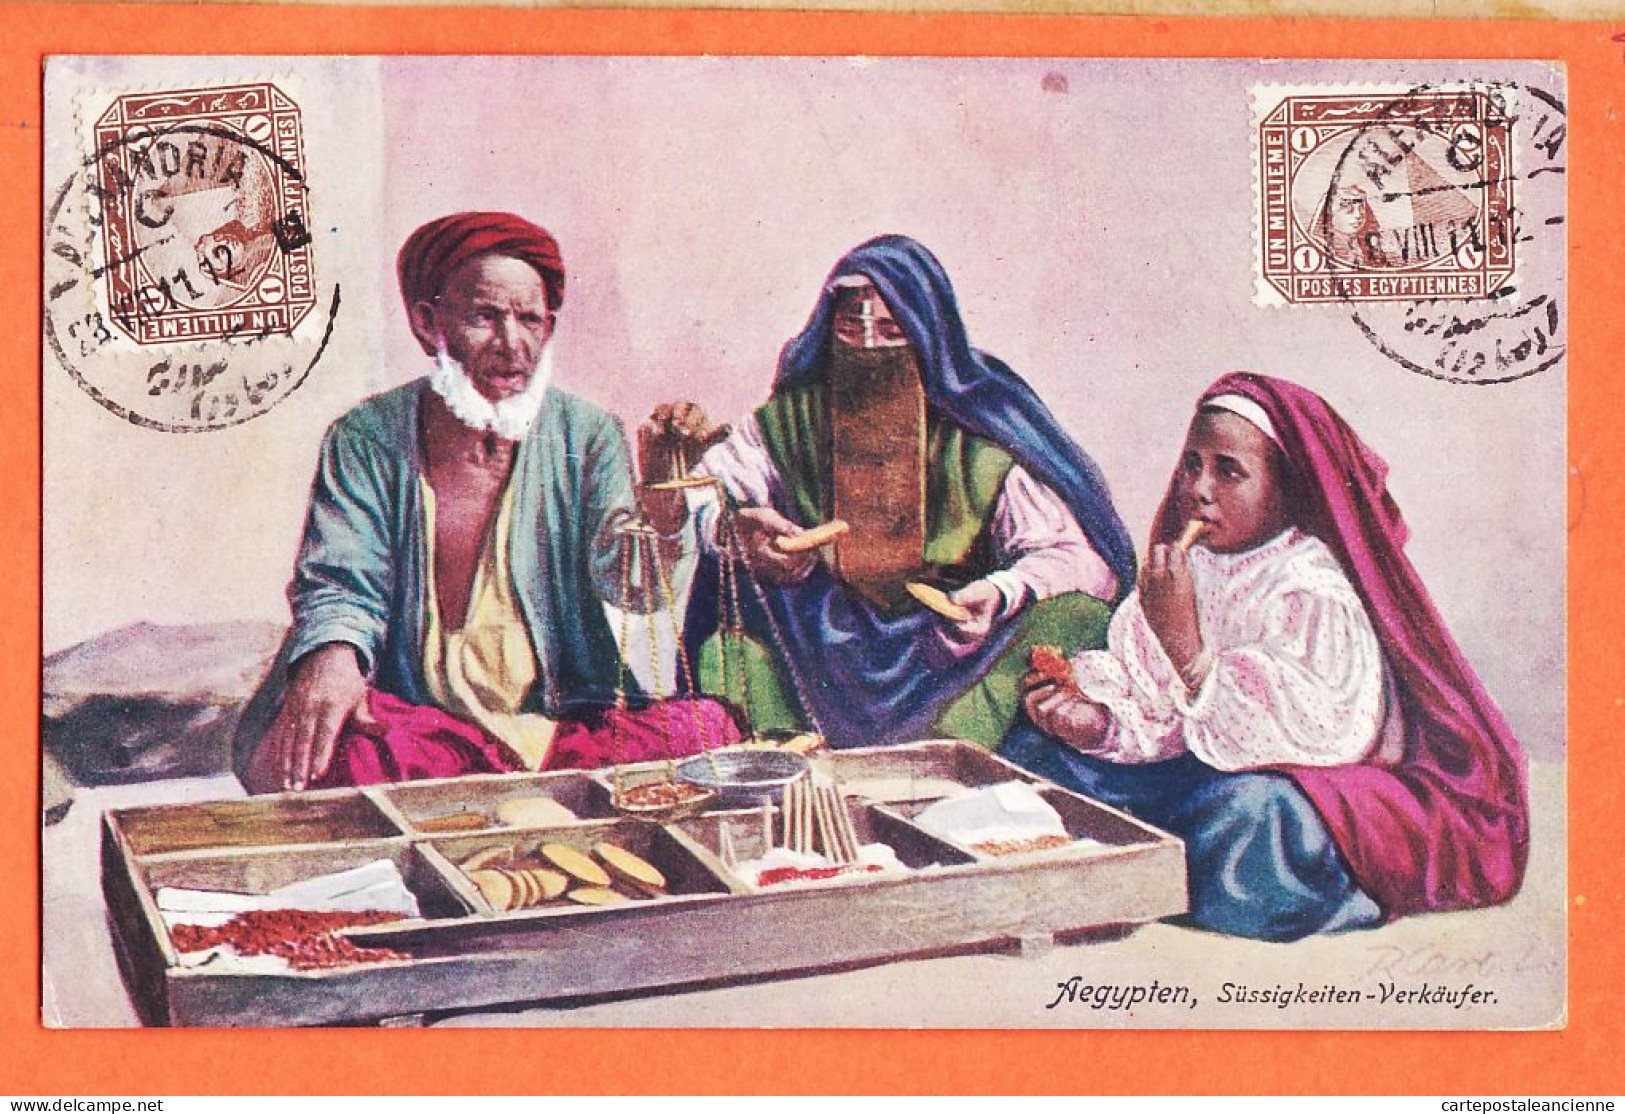 38955 / ⭐ AEGYPTEN Süssigkeiten Verkaufer ◉ EGYPTE Vendeur Friandises 1911 à Jeanne LEVECQUE Nanterre ◉ WANDERER 1336 - Personnes